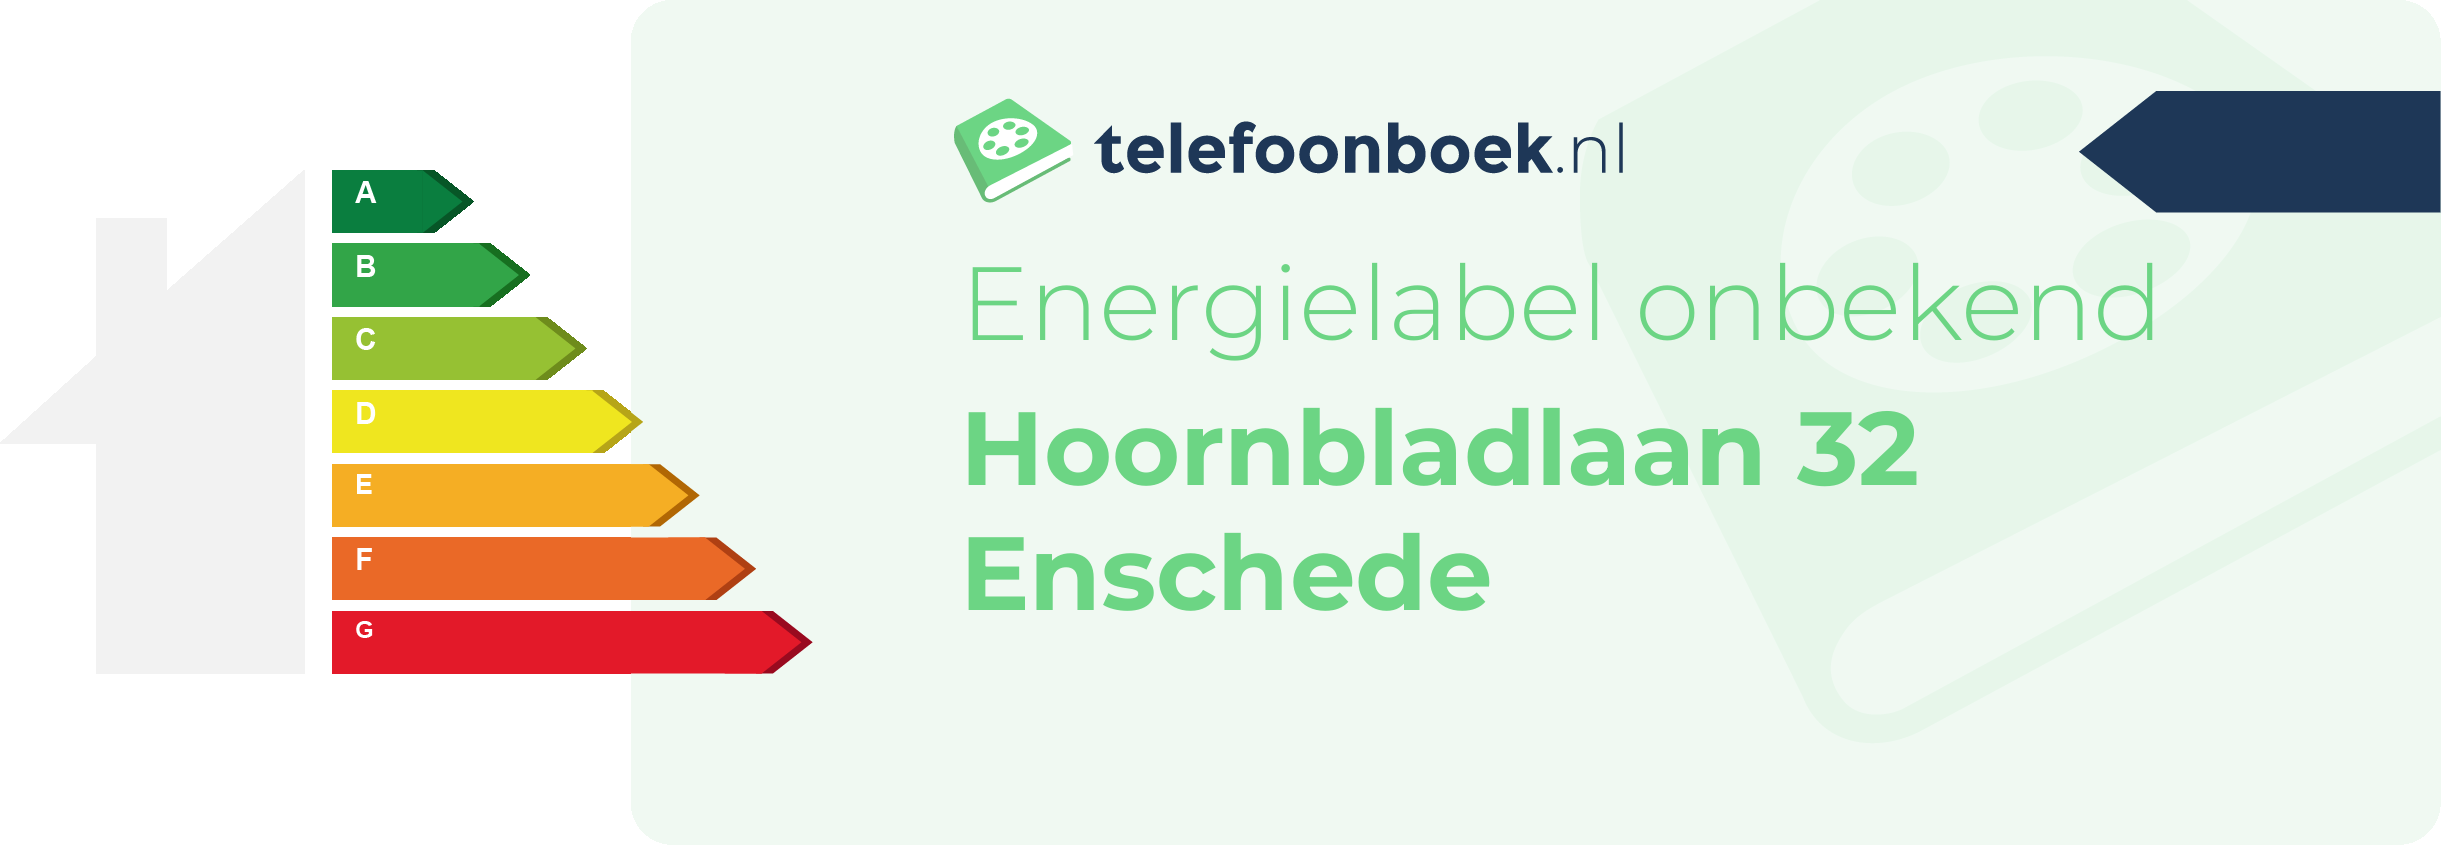 Energielabel Hoornbladlaan 32 Enschede